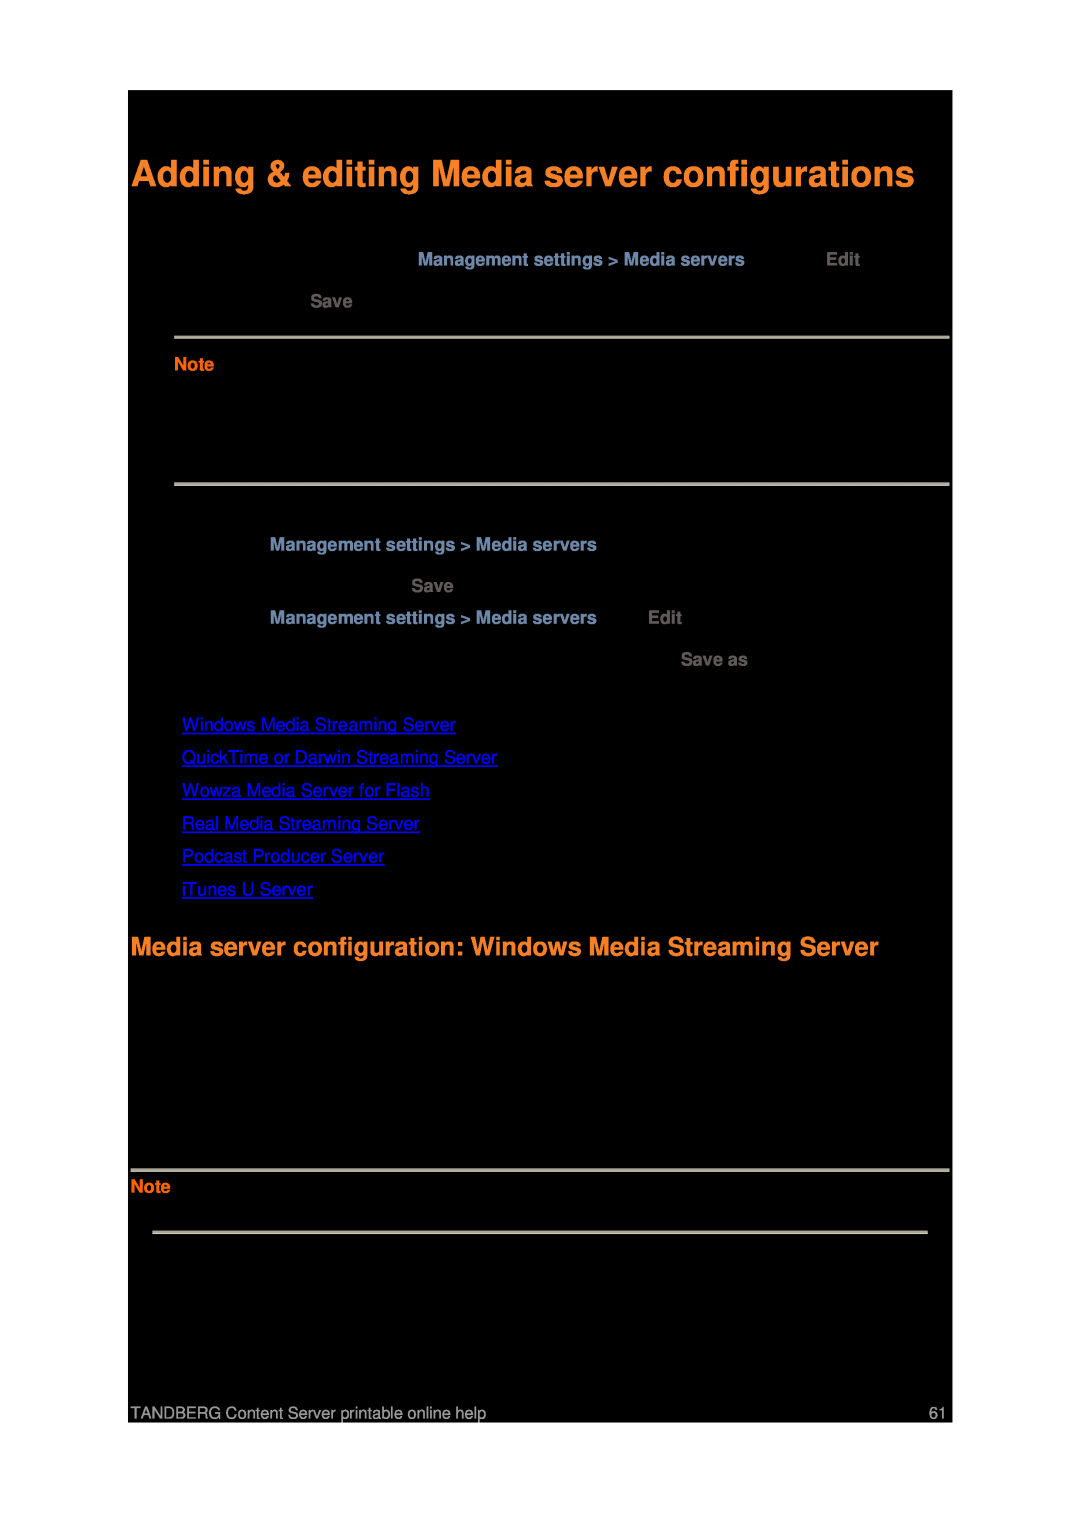 TANDBERG D1459501 Adding & editing Media server configurations, Media server configuration Windows Media Streaming Server 